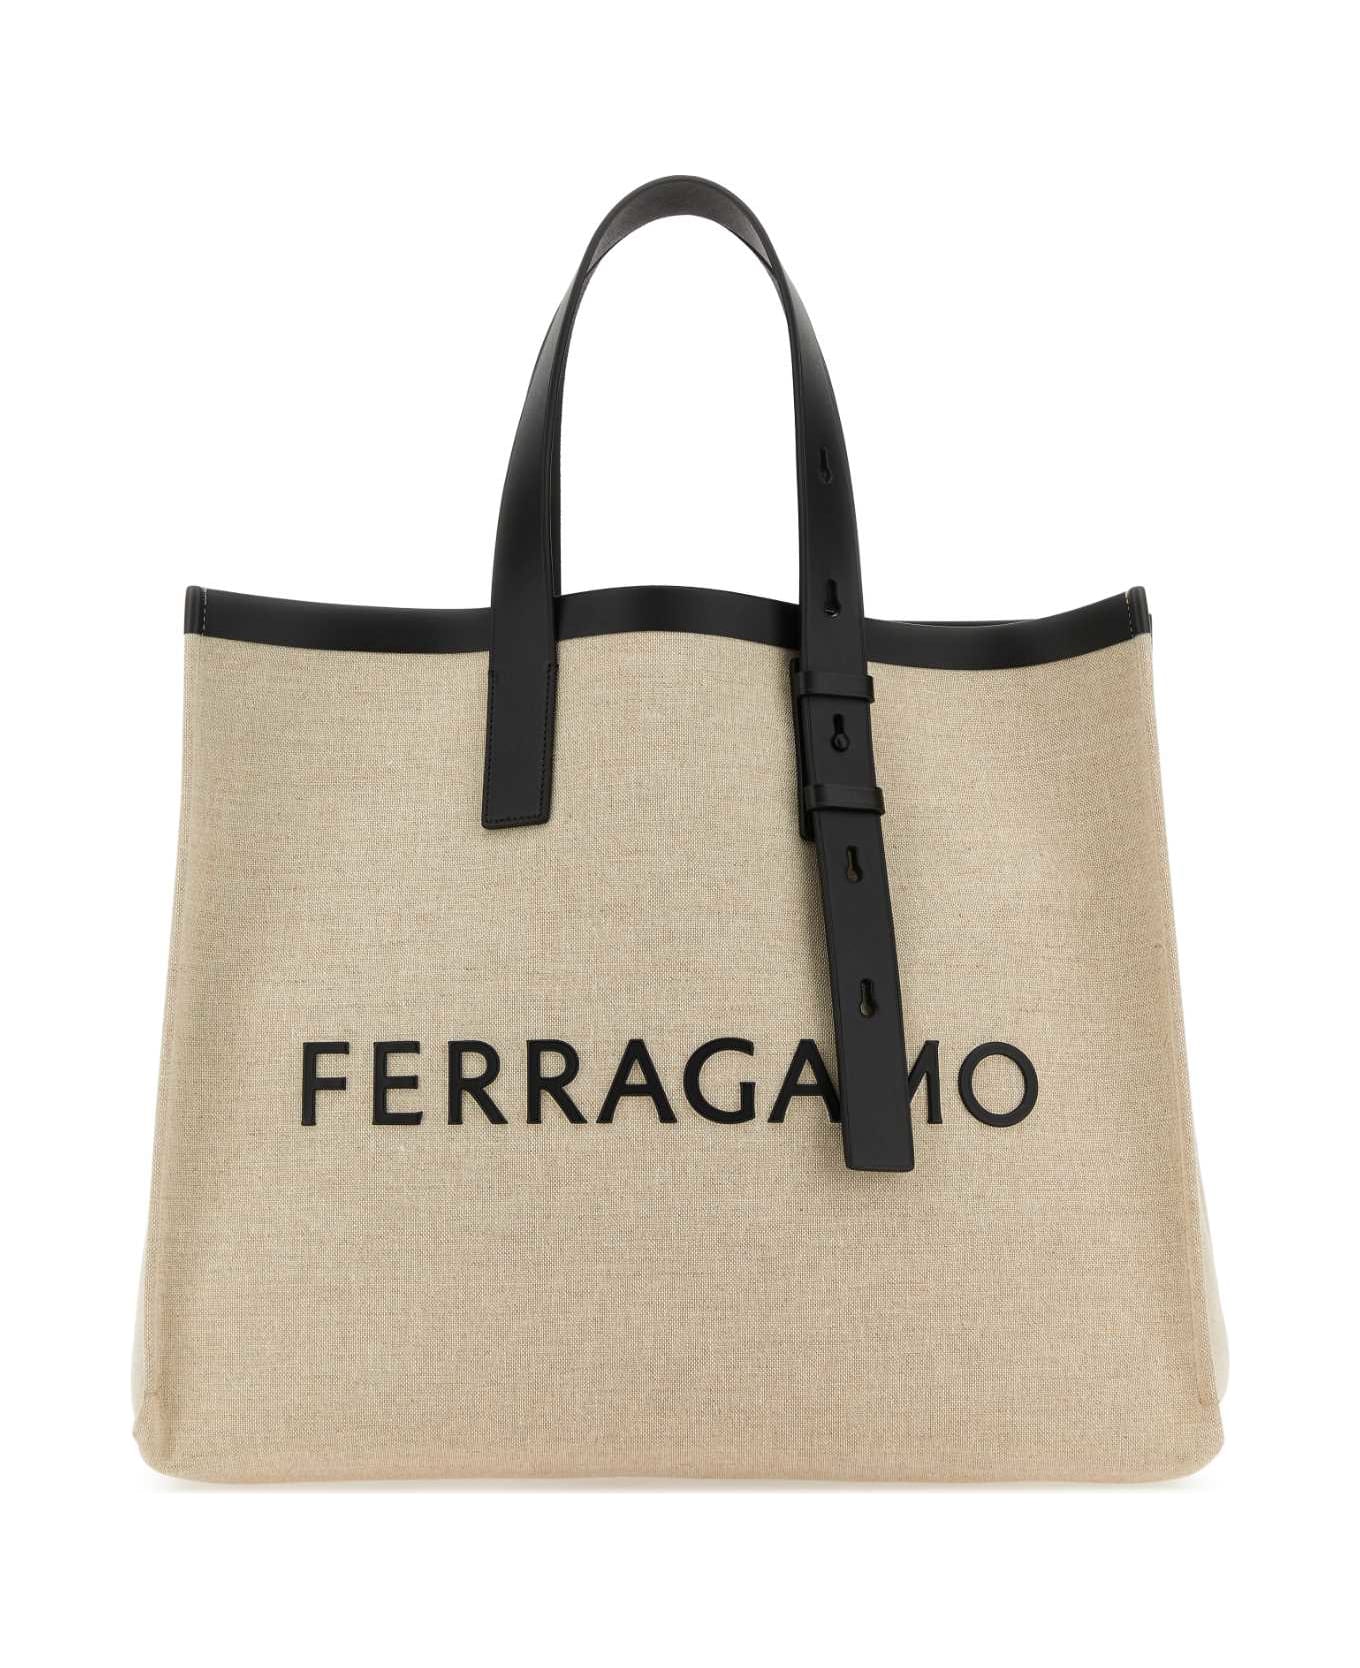 Ferragamo Sand Canvas Shopping Bag - NATURALENERO